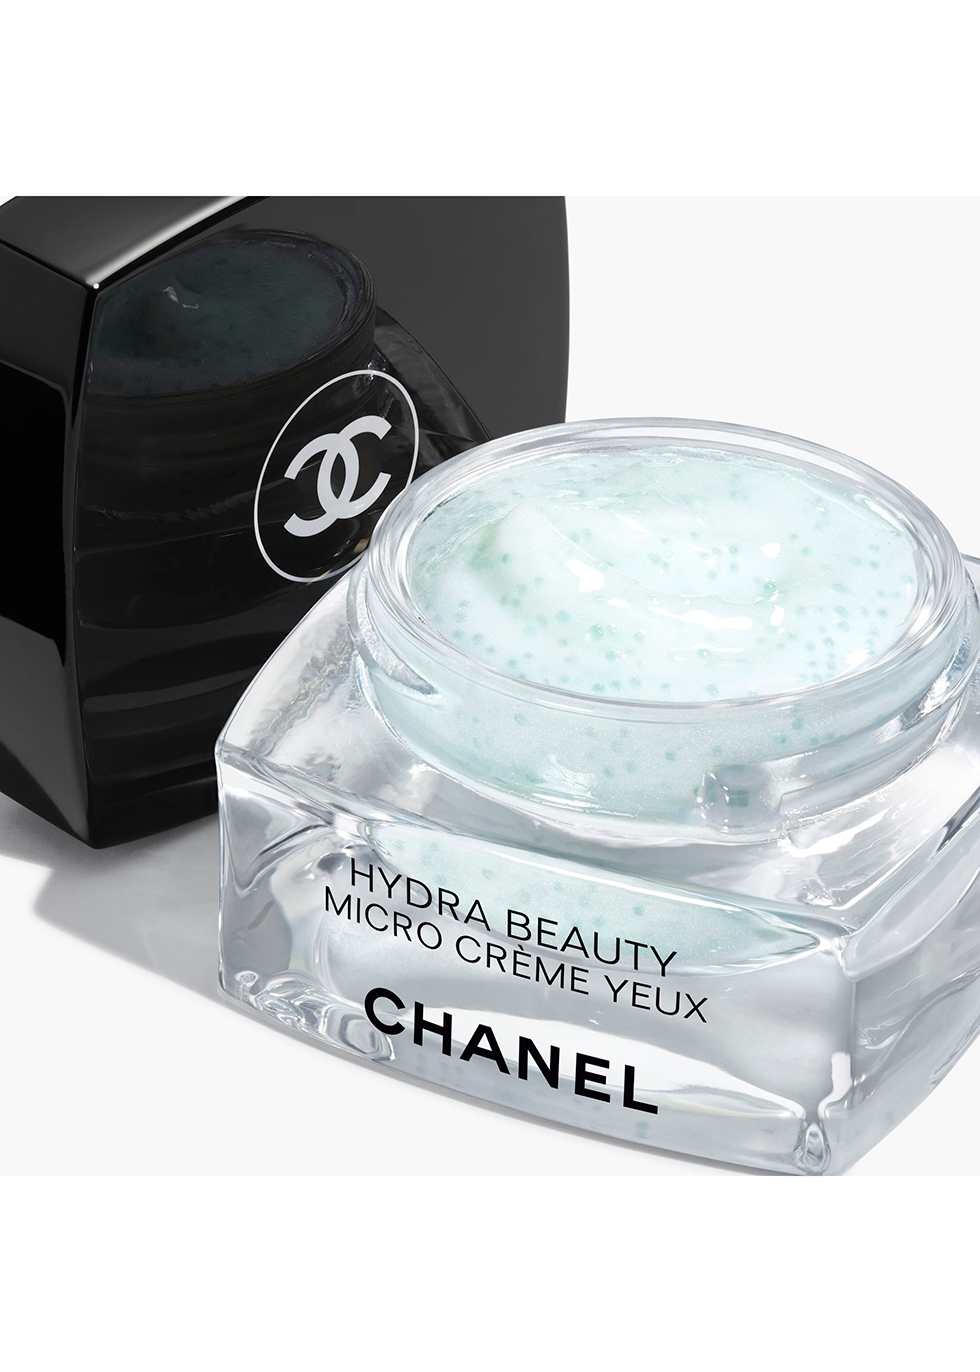 Moisturizing Face Cream  Chanel Hydra Beauty Micro Creme  MAKEUP